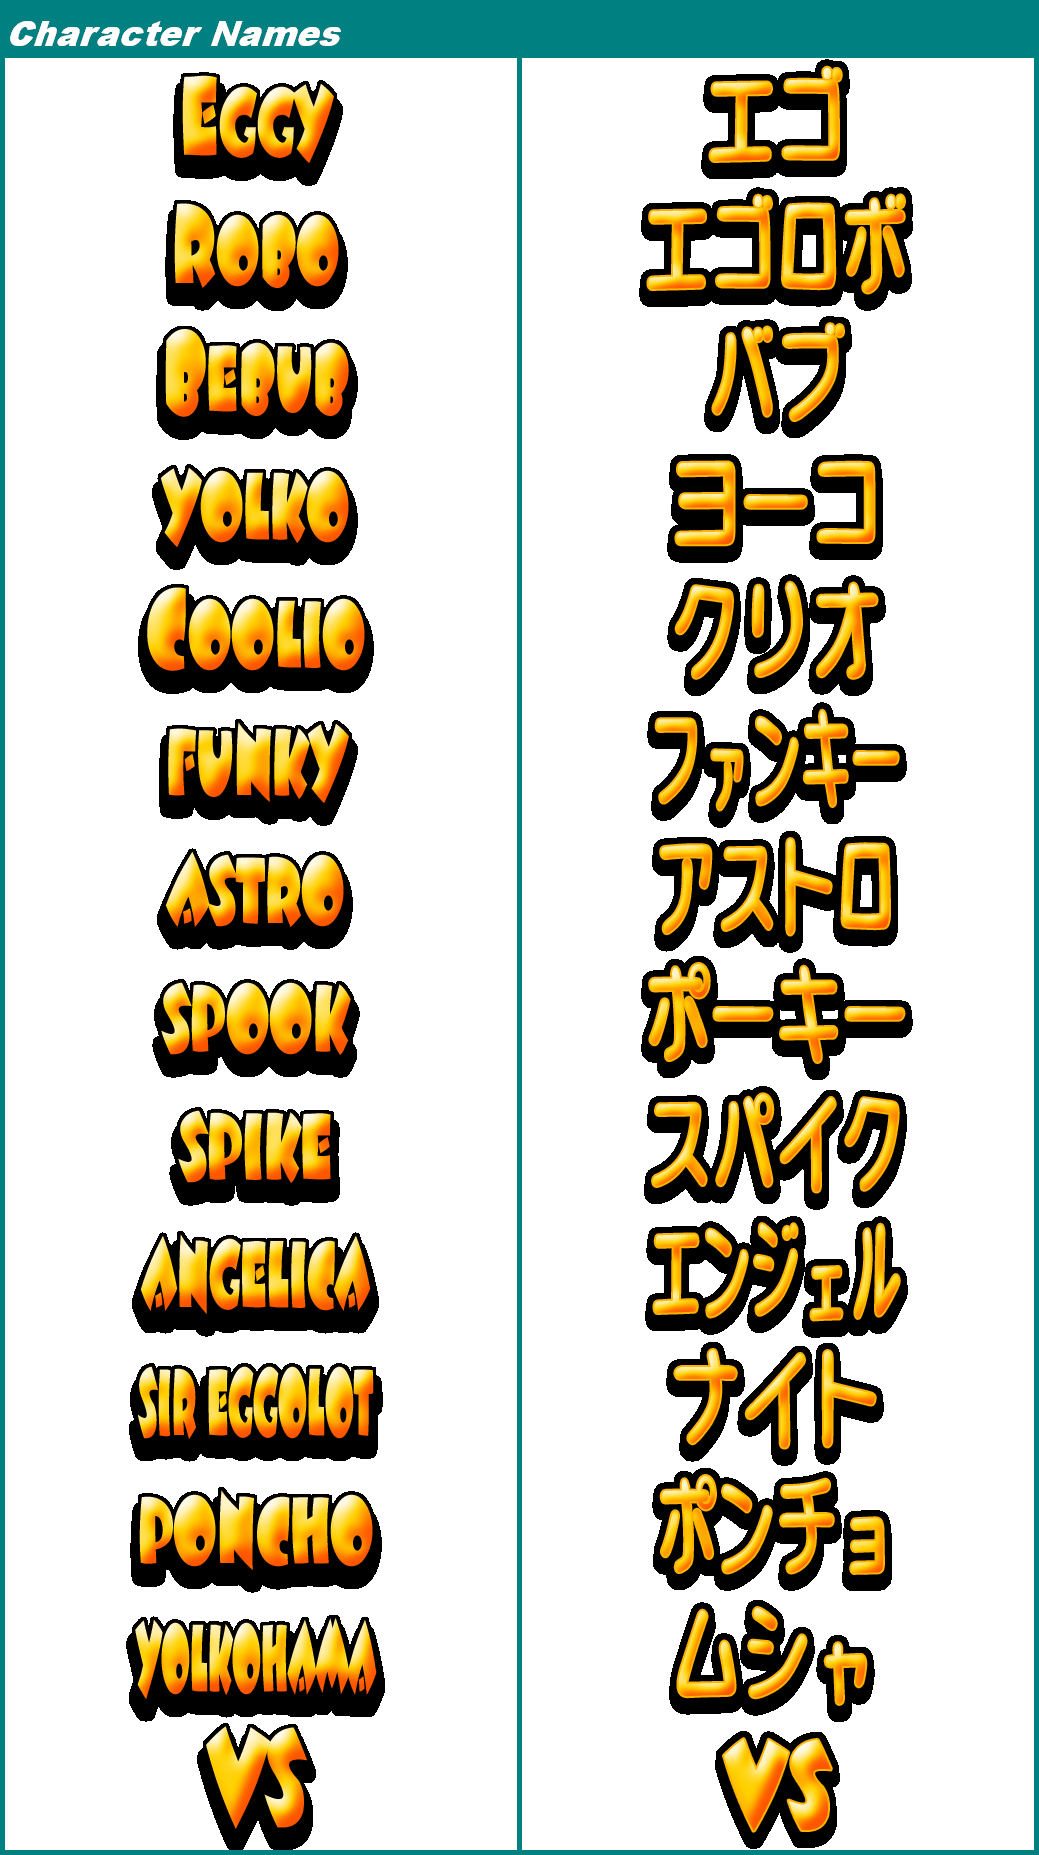 Egg Mania: Eggstreme Madness - Character Names (Loading)